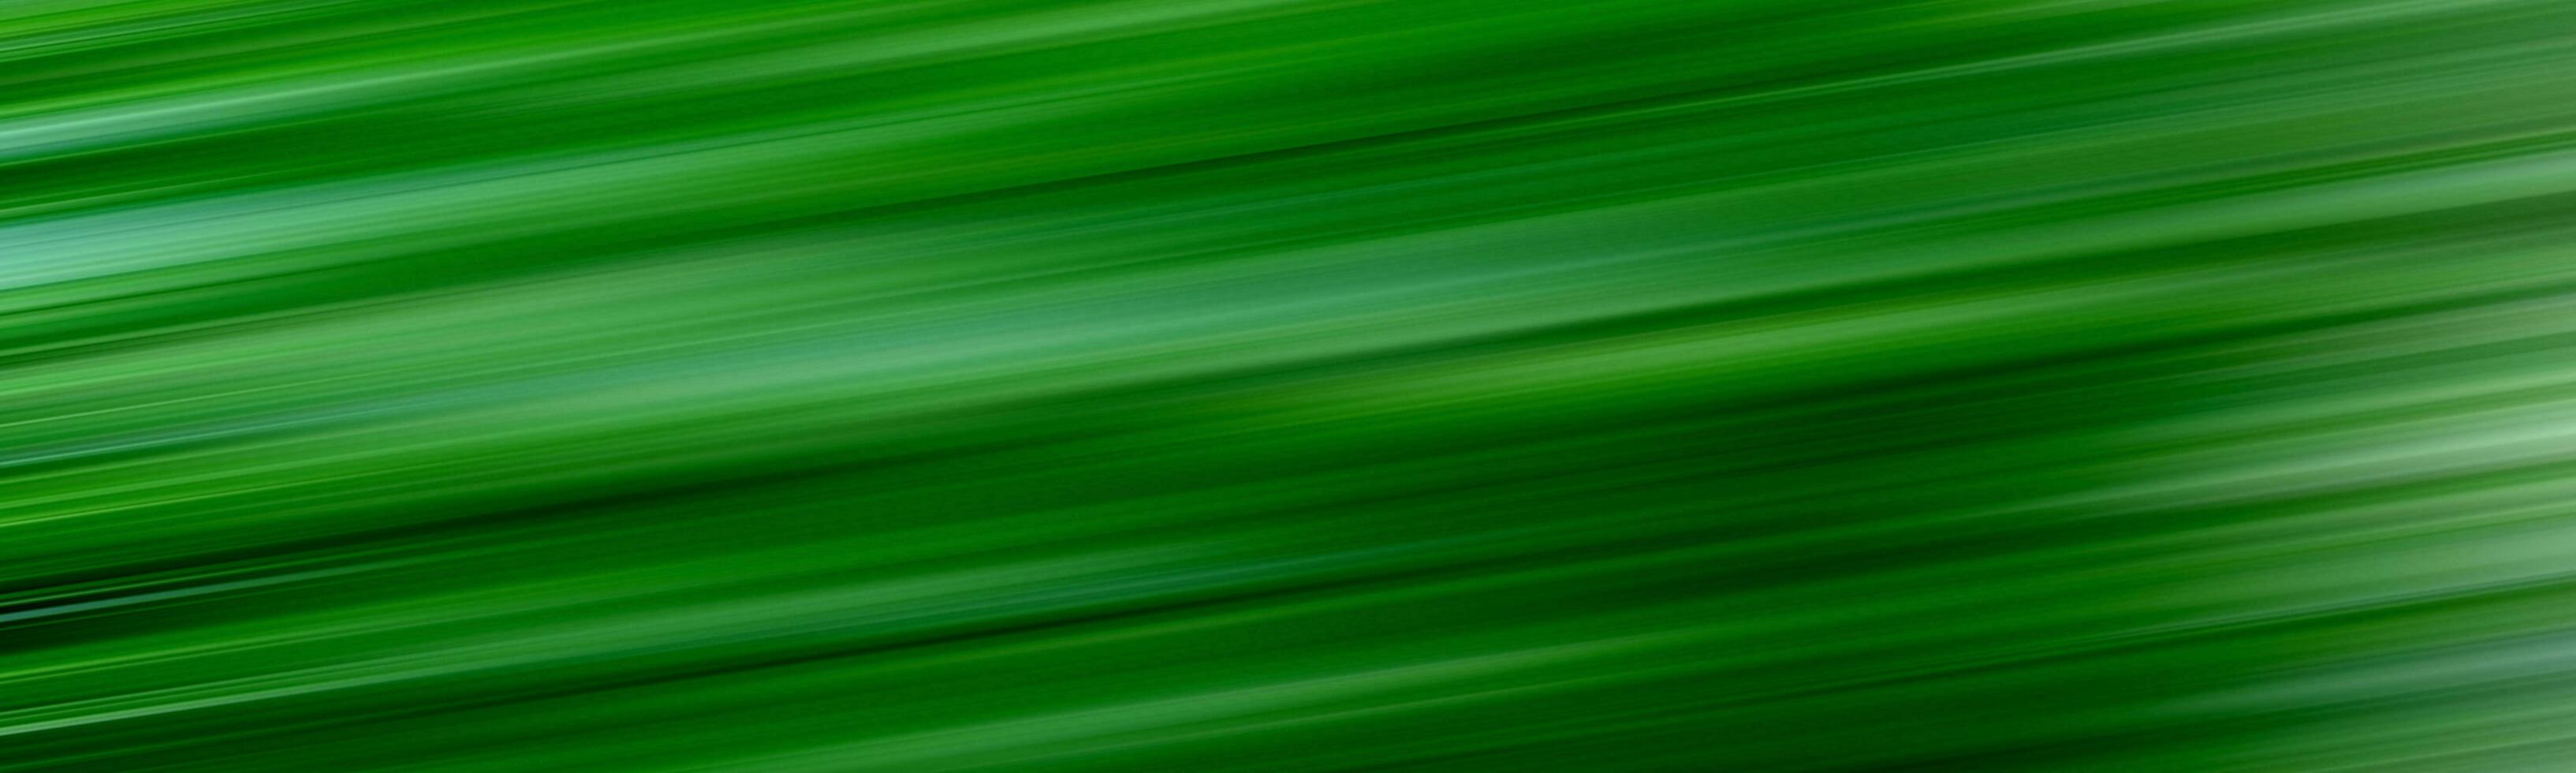 green motion blur background - stock photo